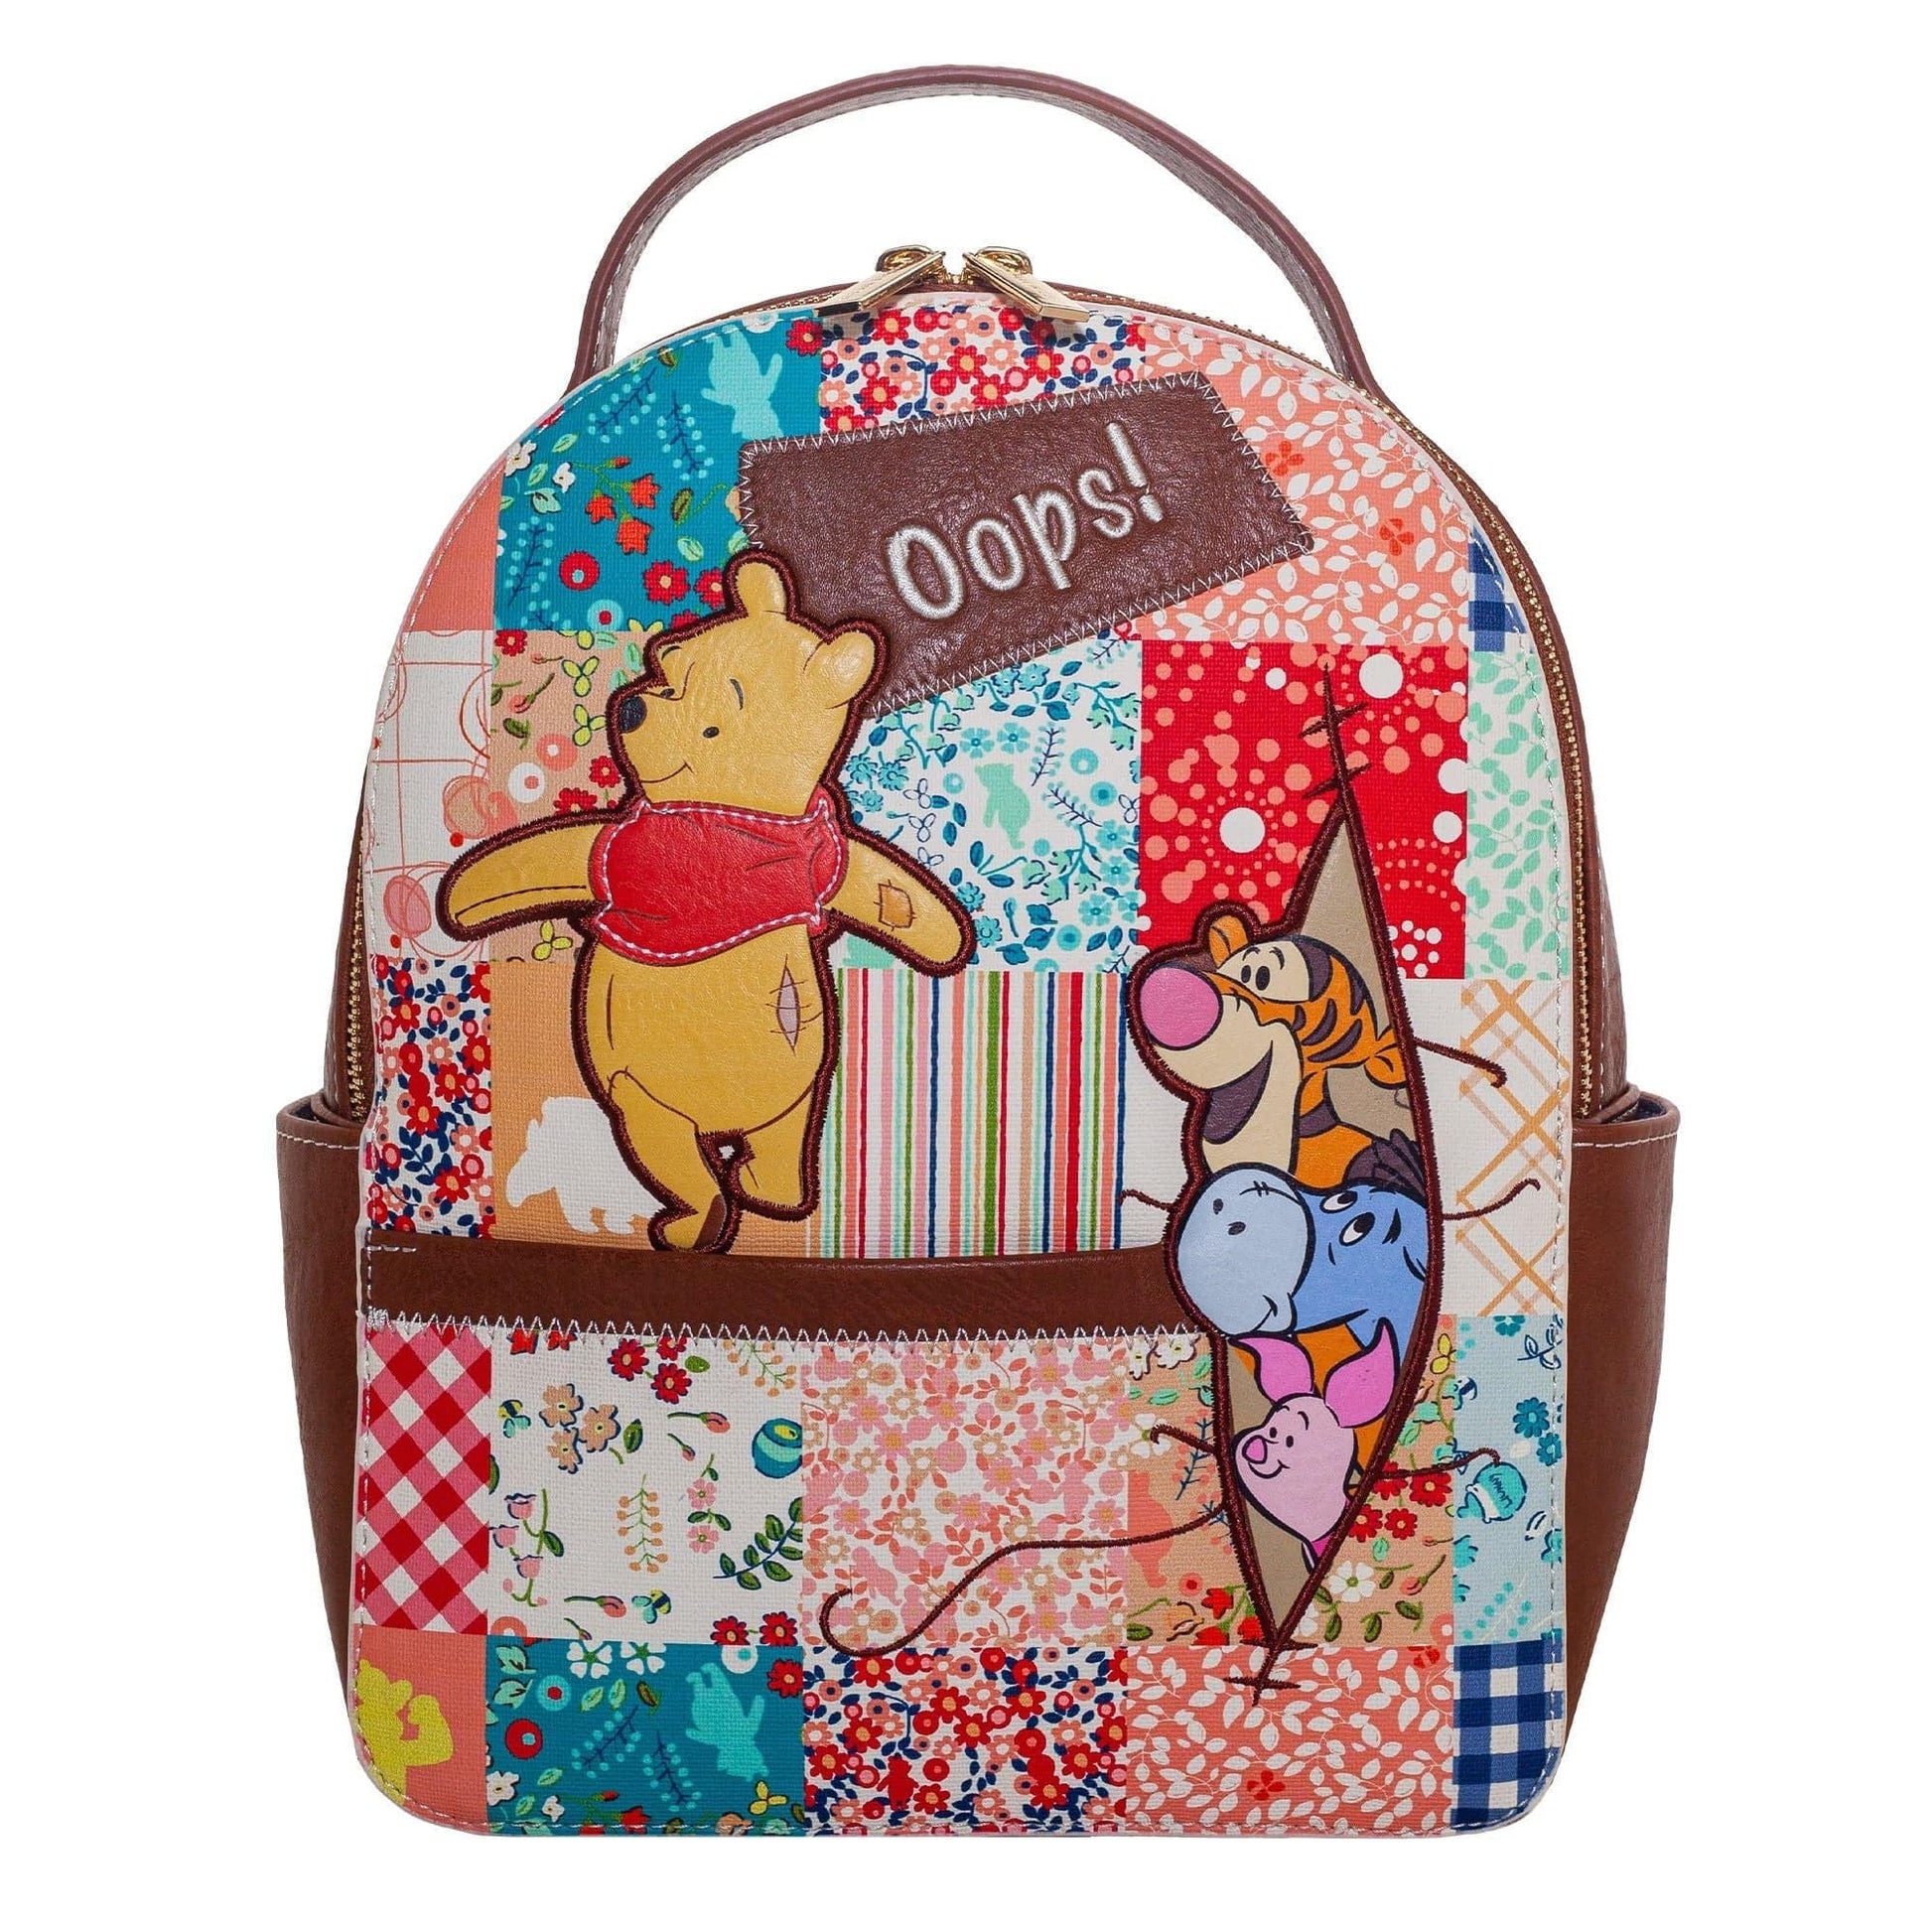 Winnie the pooh diaper bag  Diaper bag set, Bags, Winnie the pooh